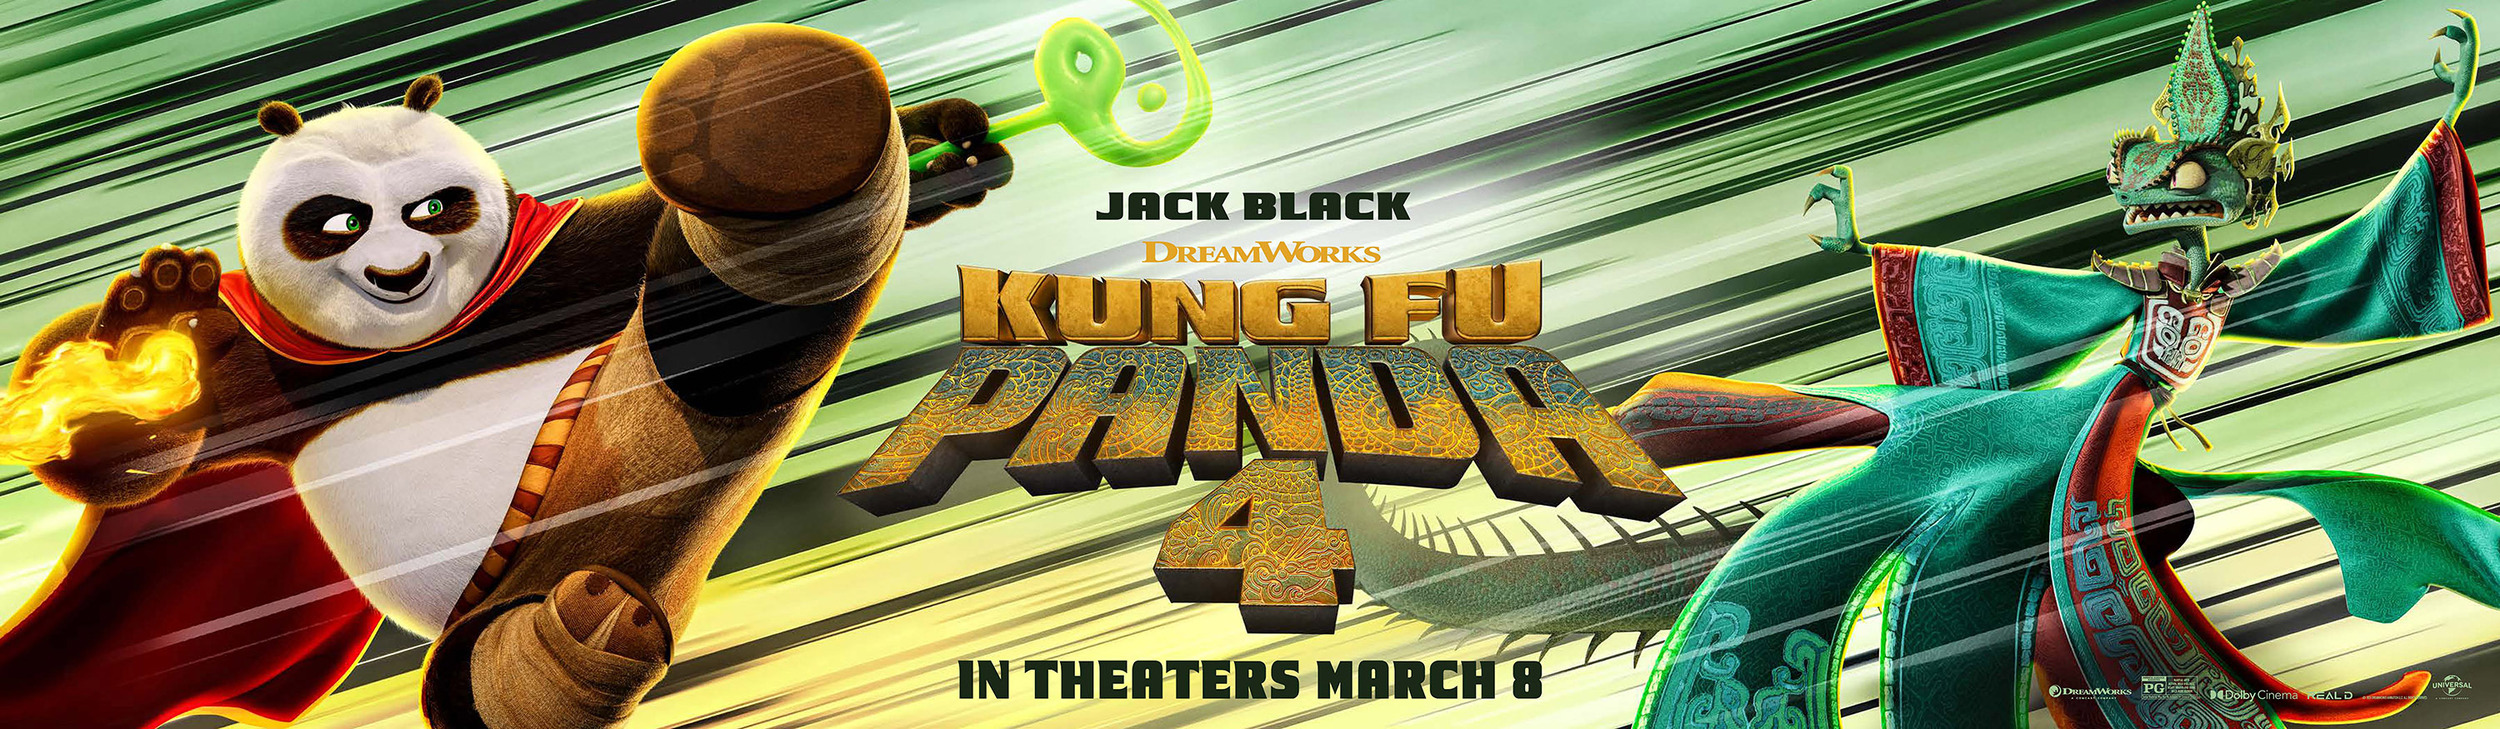 Mega Sized Movie Poster Image for Kung Fu Panda 4 (#19 of 20)